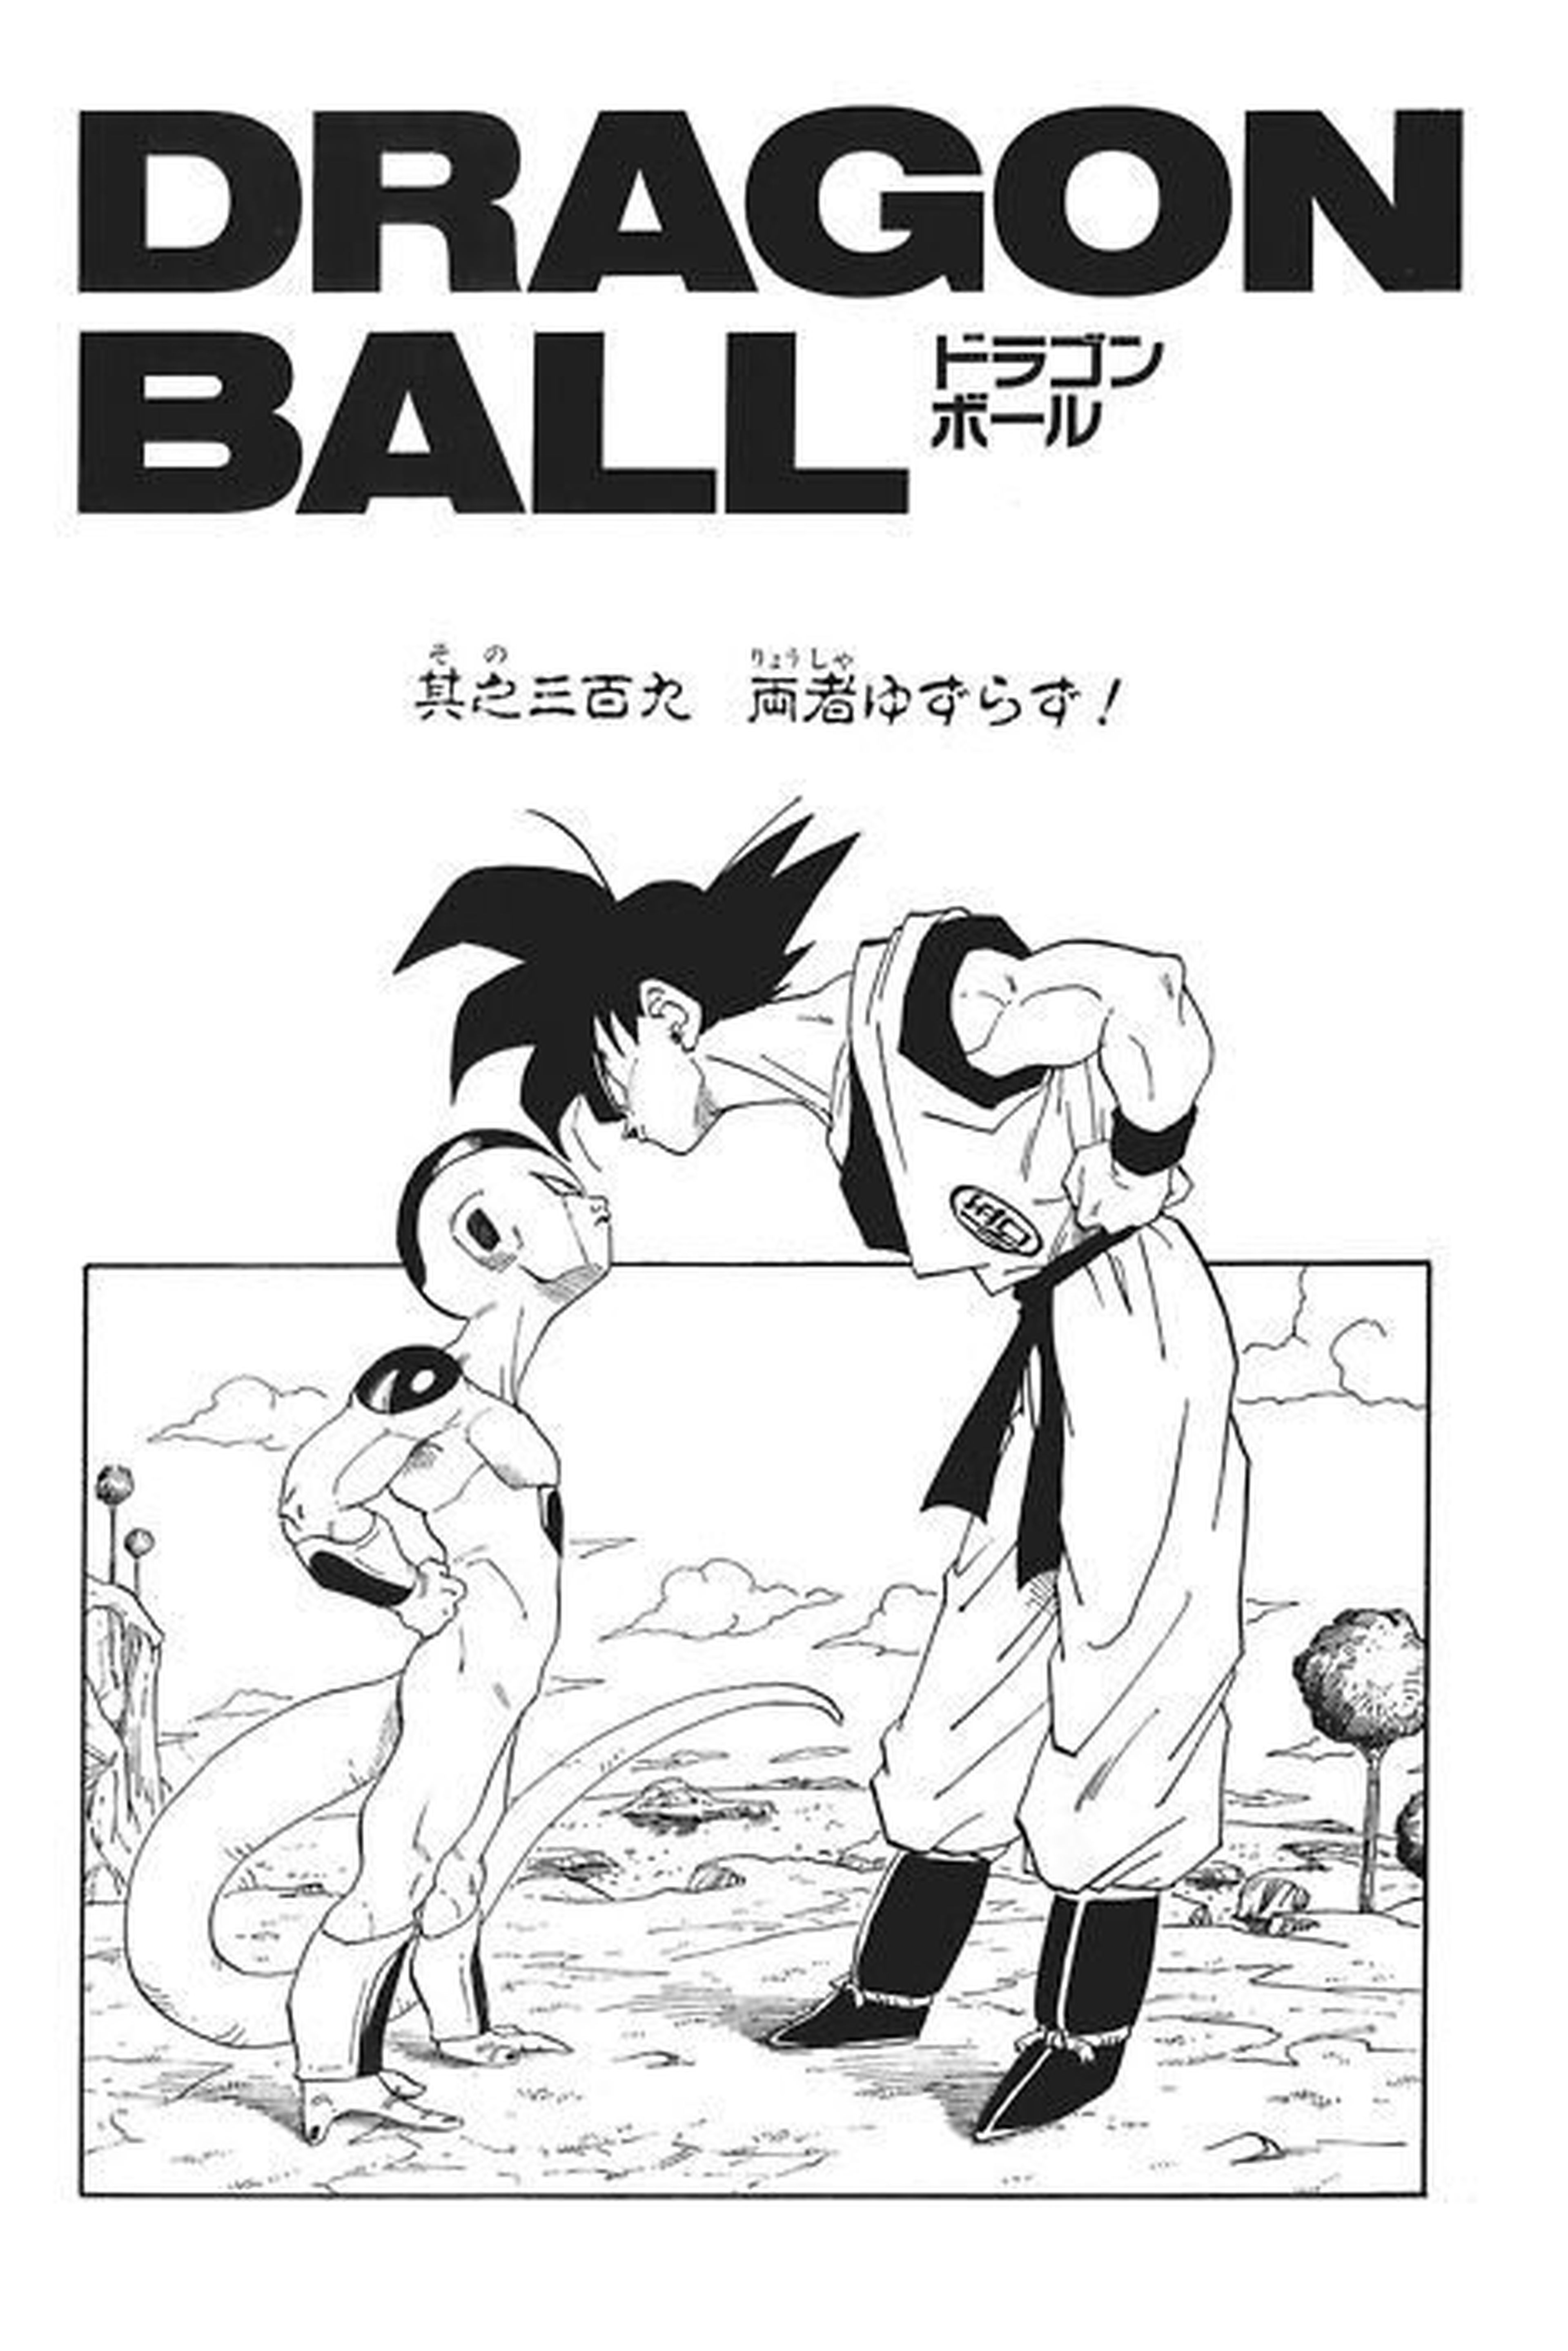 El grandioso homenaje de Chikashi Kubota a Dragon Ball Z con su dibujo de One Punch Man